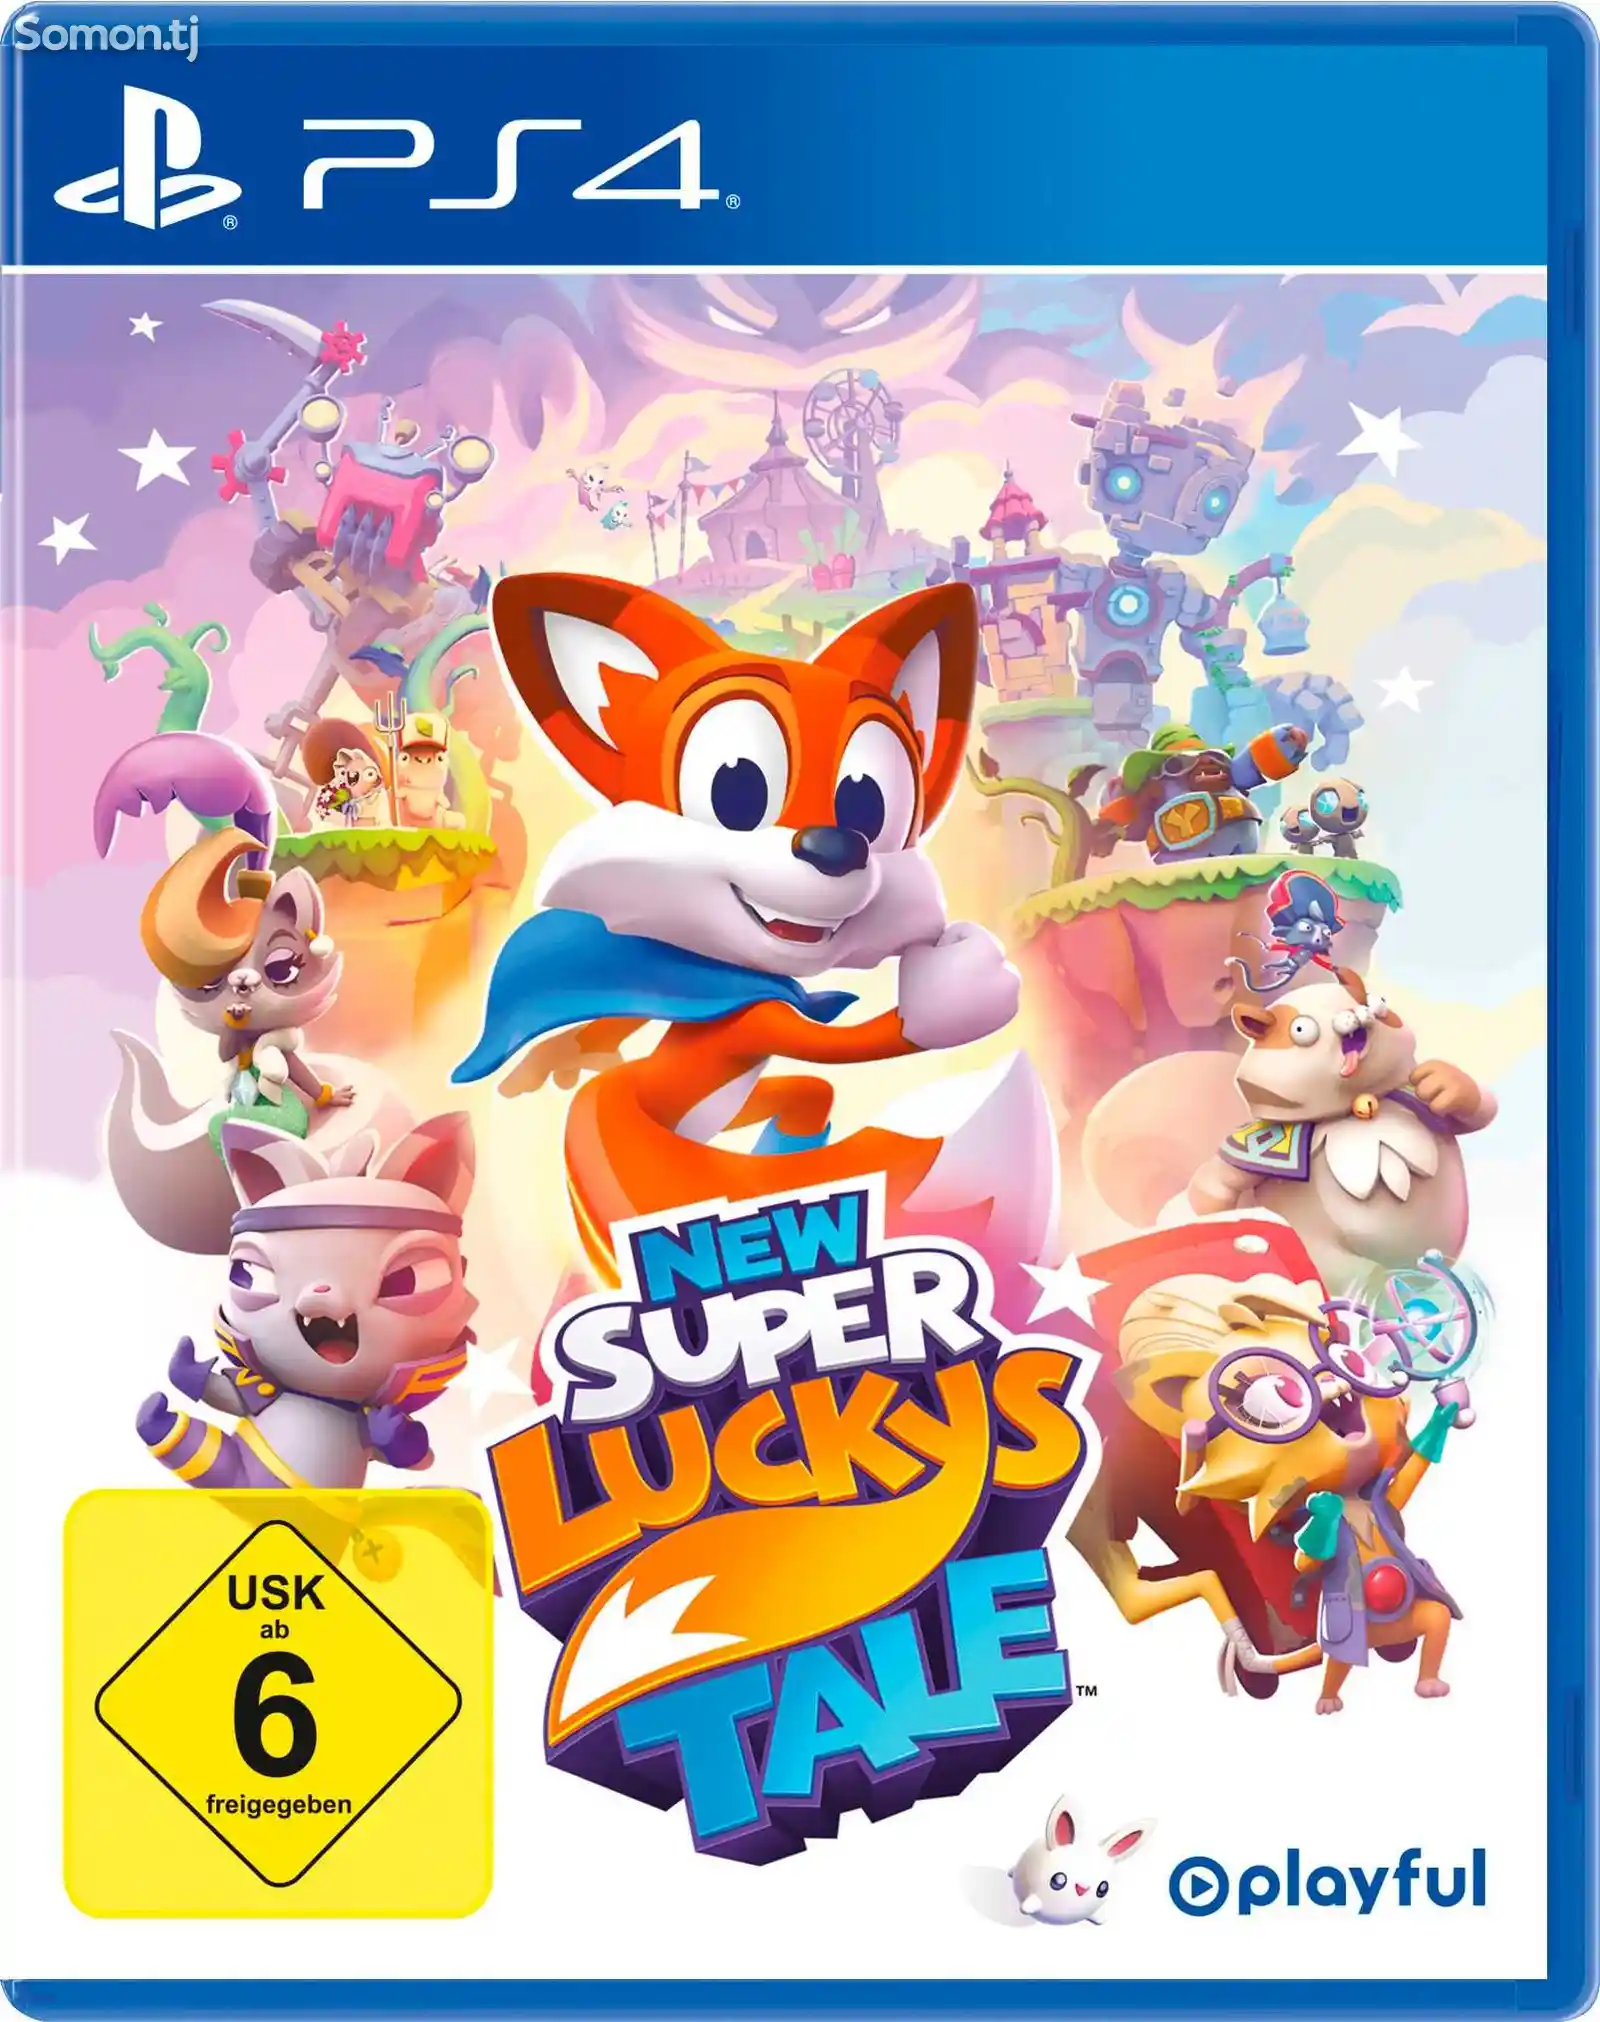 Игра New Super Luckys Tale для PS-4 / 5.05 / 6.72 / 7.02 / 7.55 / 9.00 /